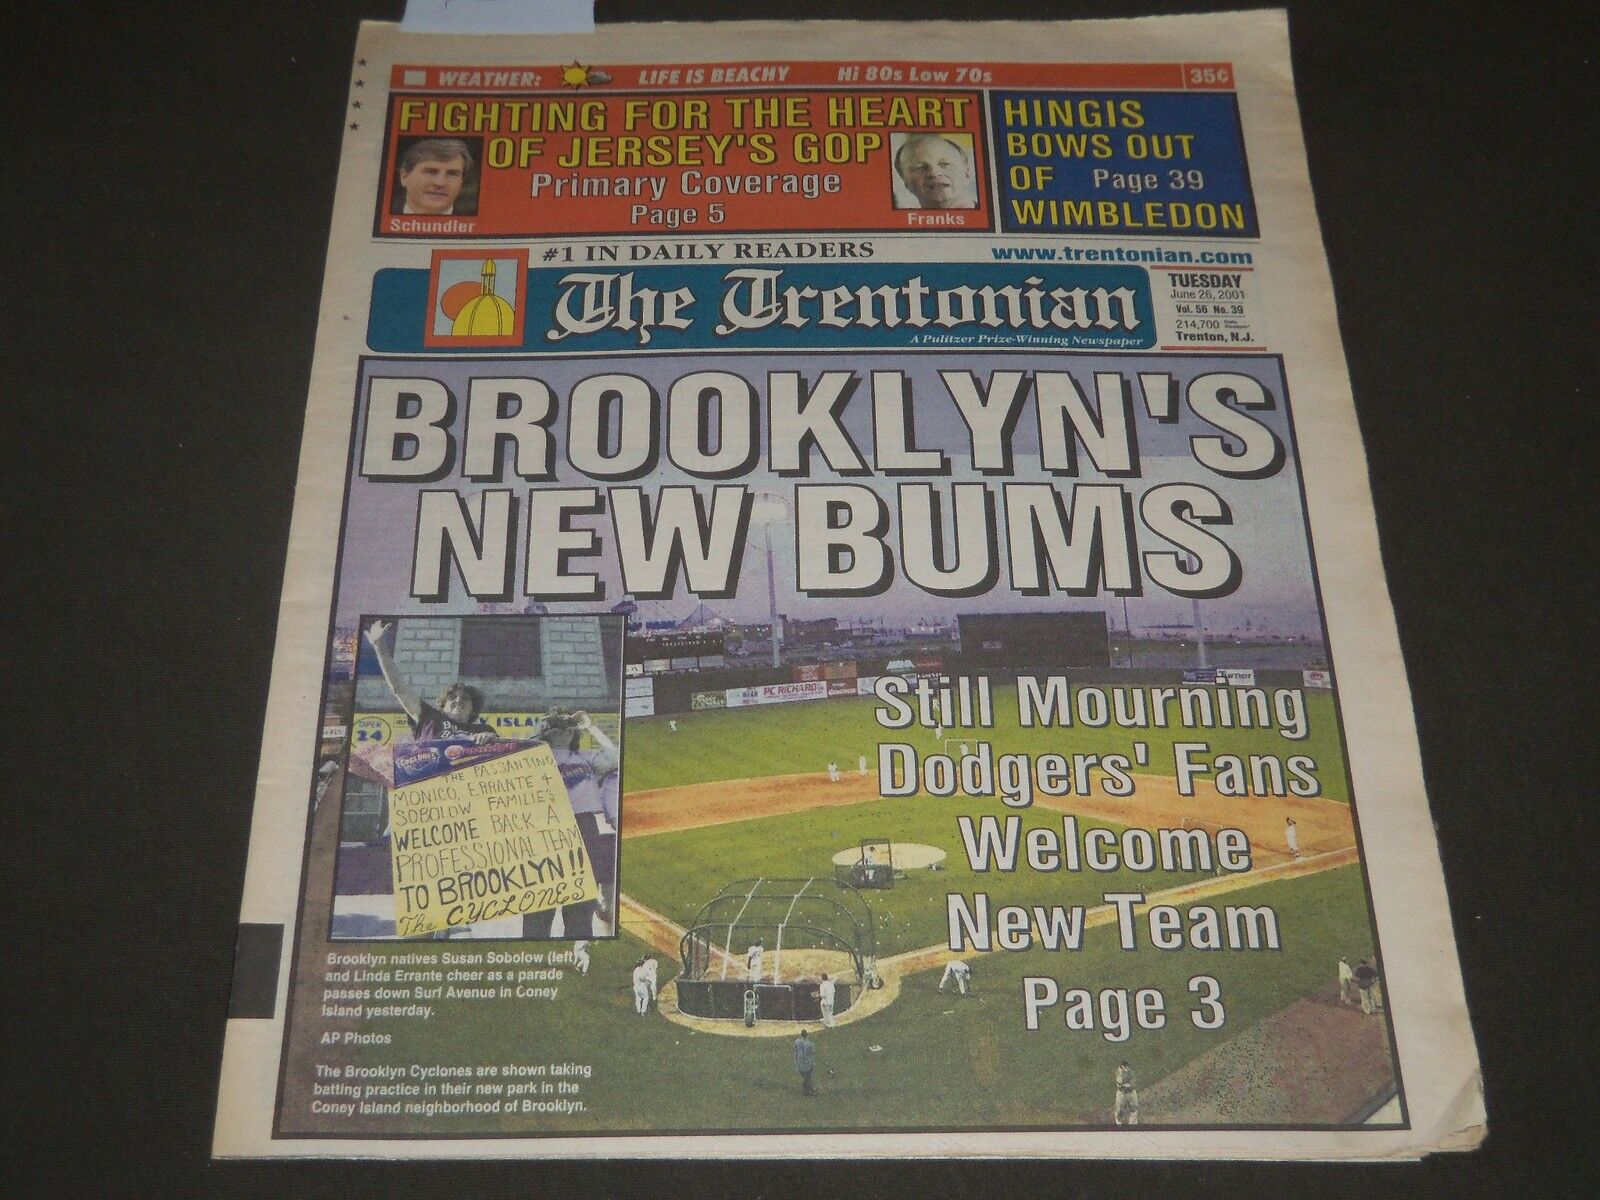 2001 JUNE 26 THE TRENTONIAN NEWSPAPER - BROOKLYN'S NEW BUMS - NP 2563